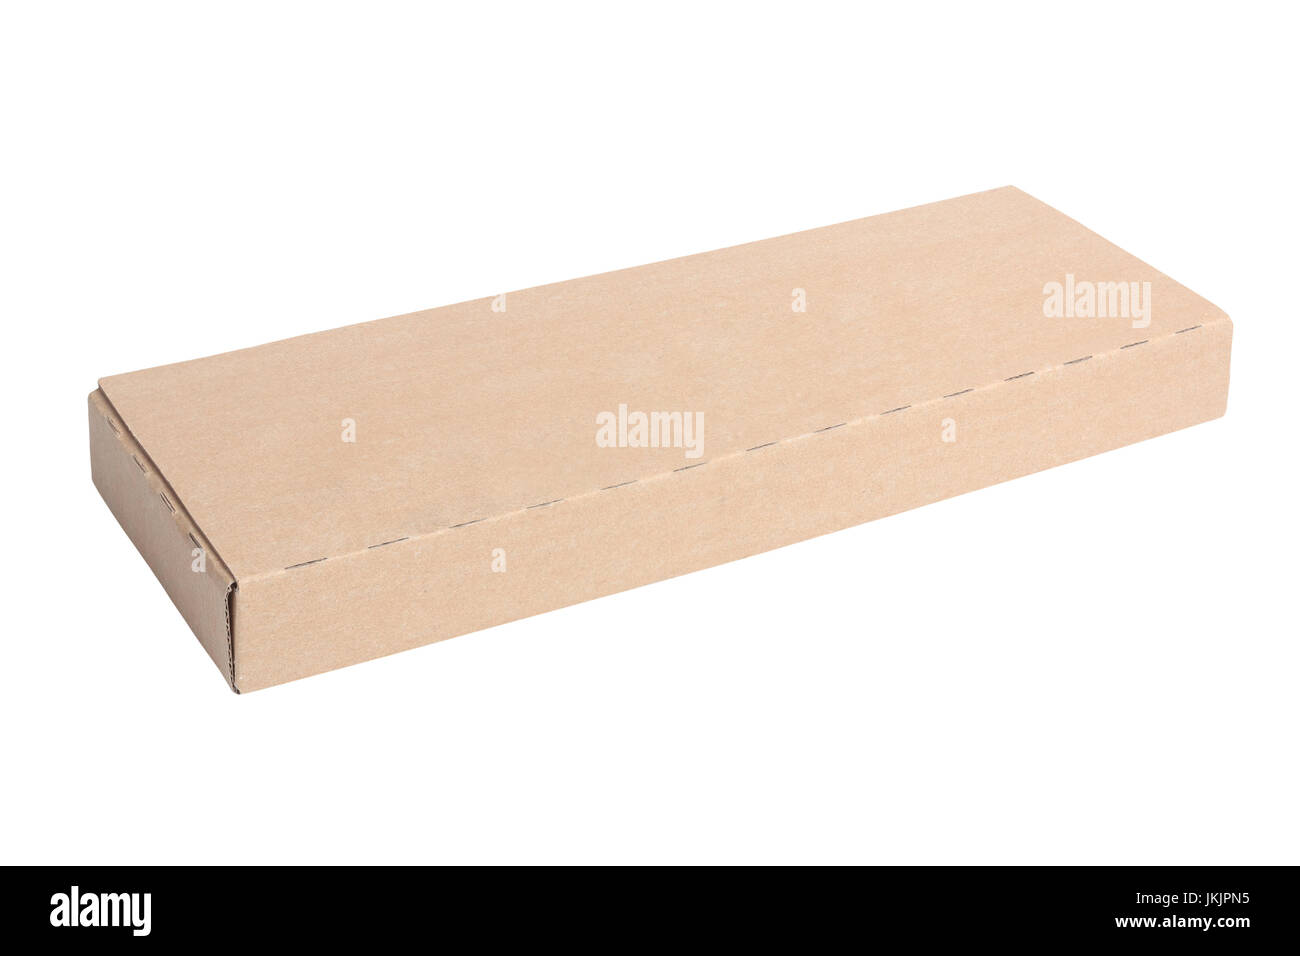 Thin cardboard box isolated on white background Stock Photo